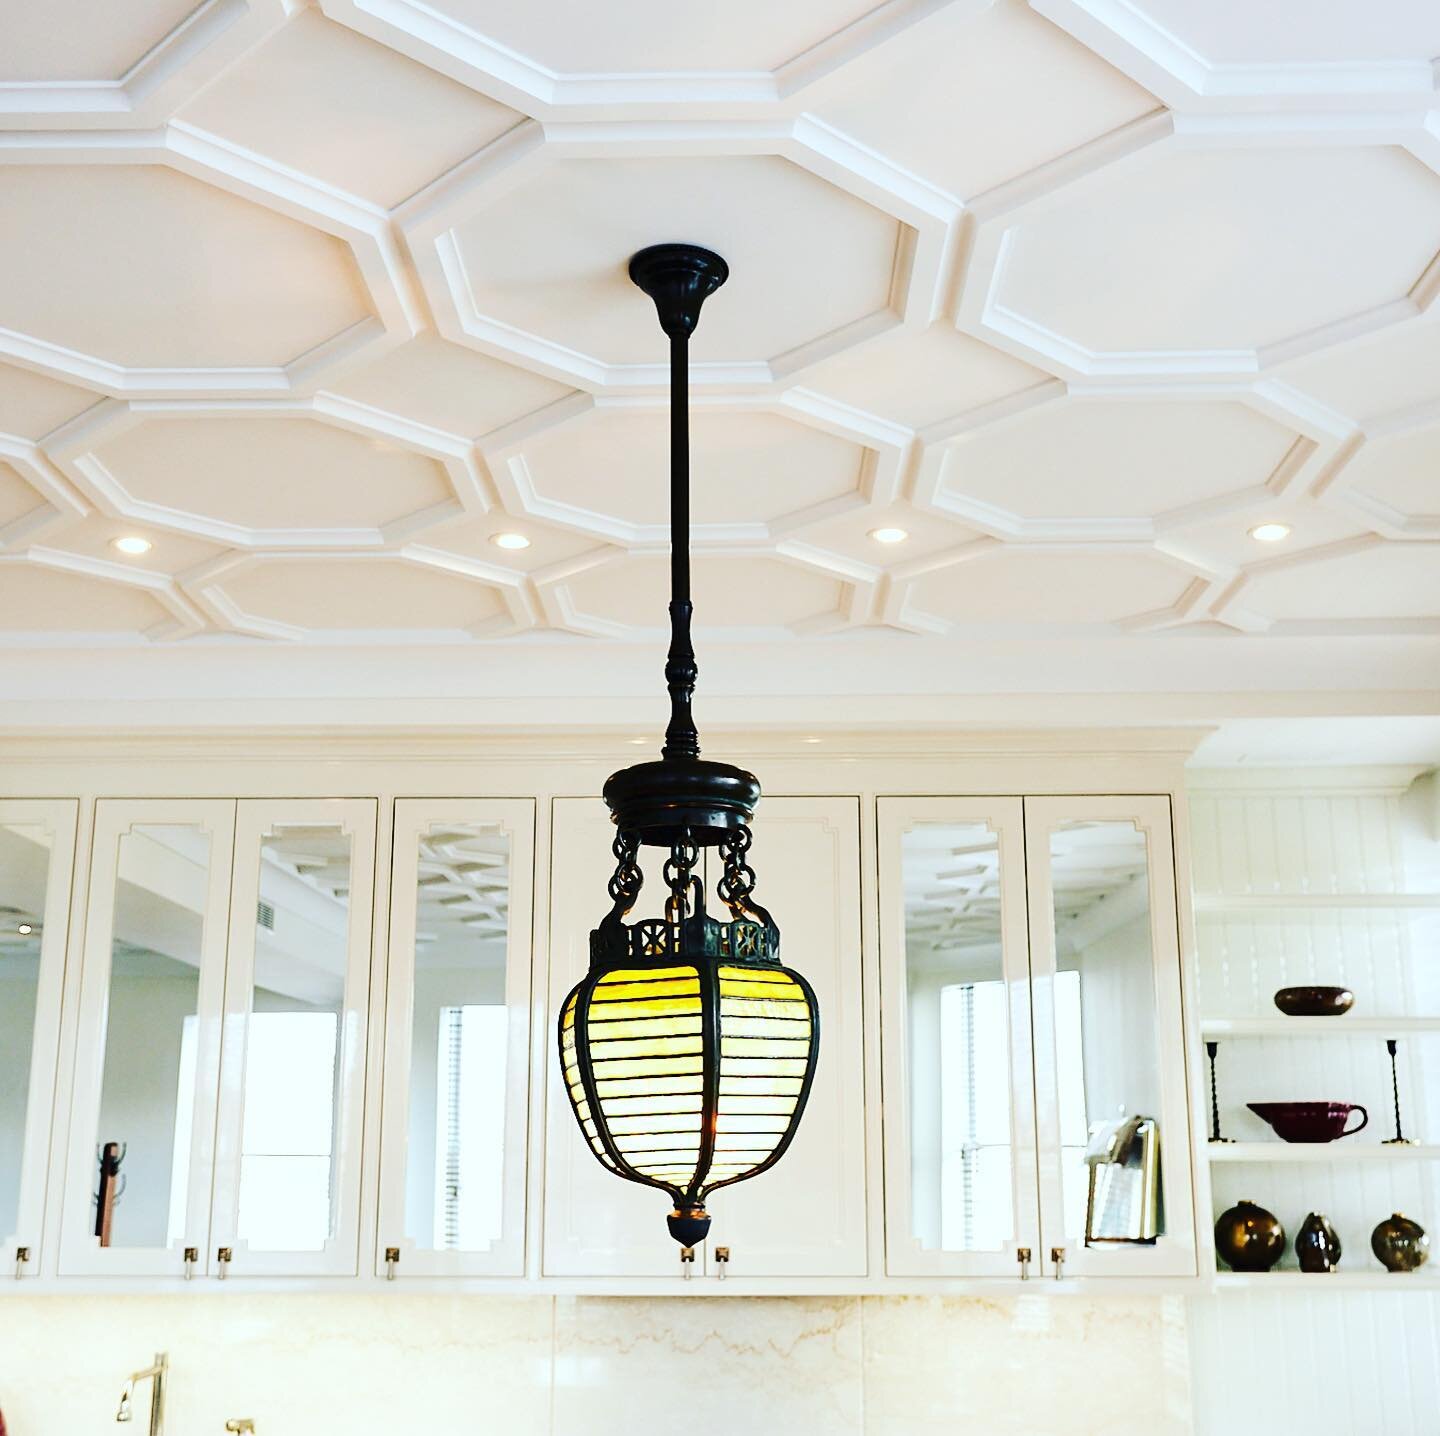 Loving this custom plaster ceiling.  #honeycomb